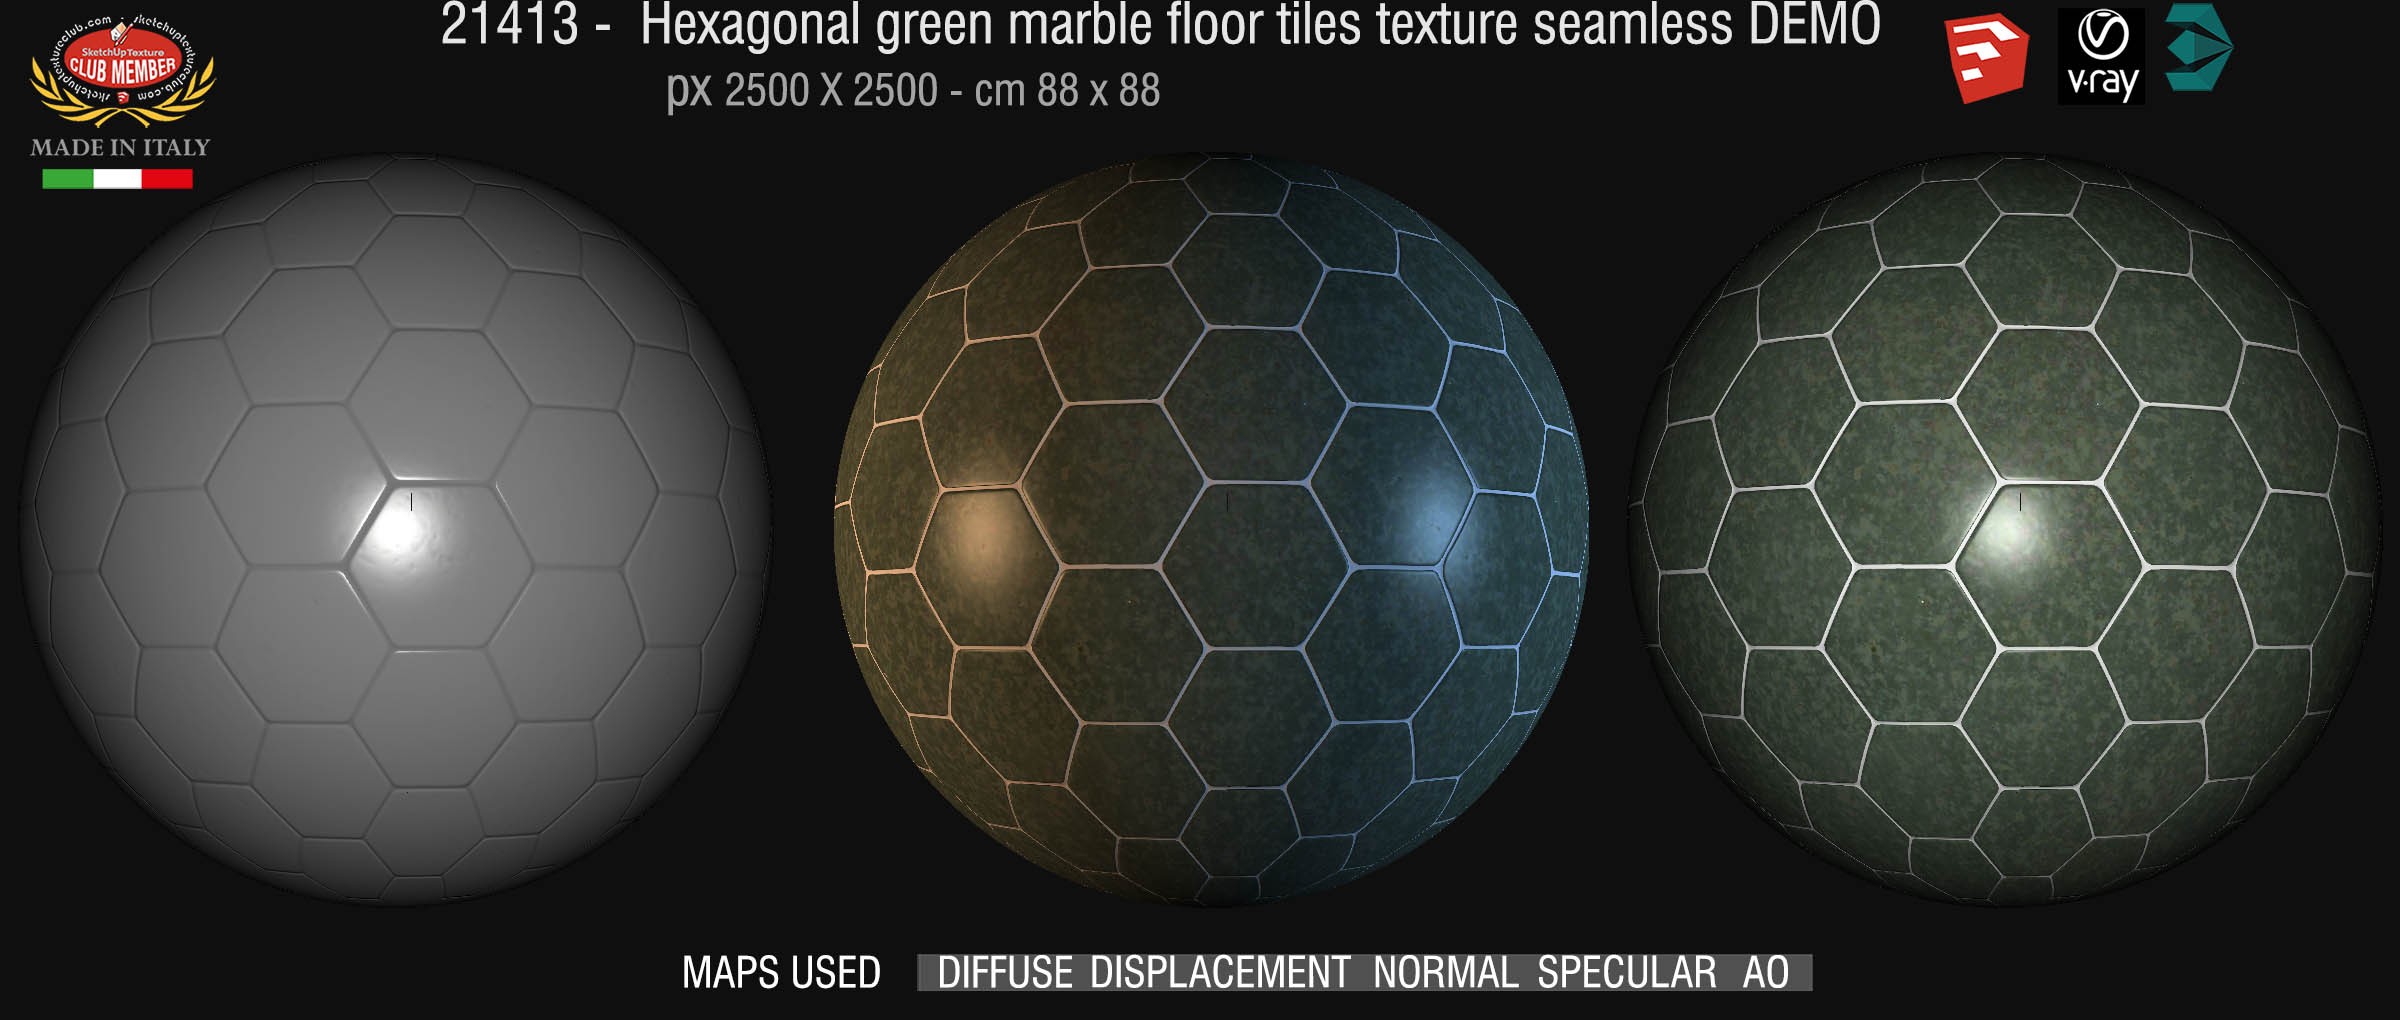 21413 hexagonal green marble tile texture seamless + maps DEMO